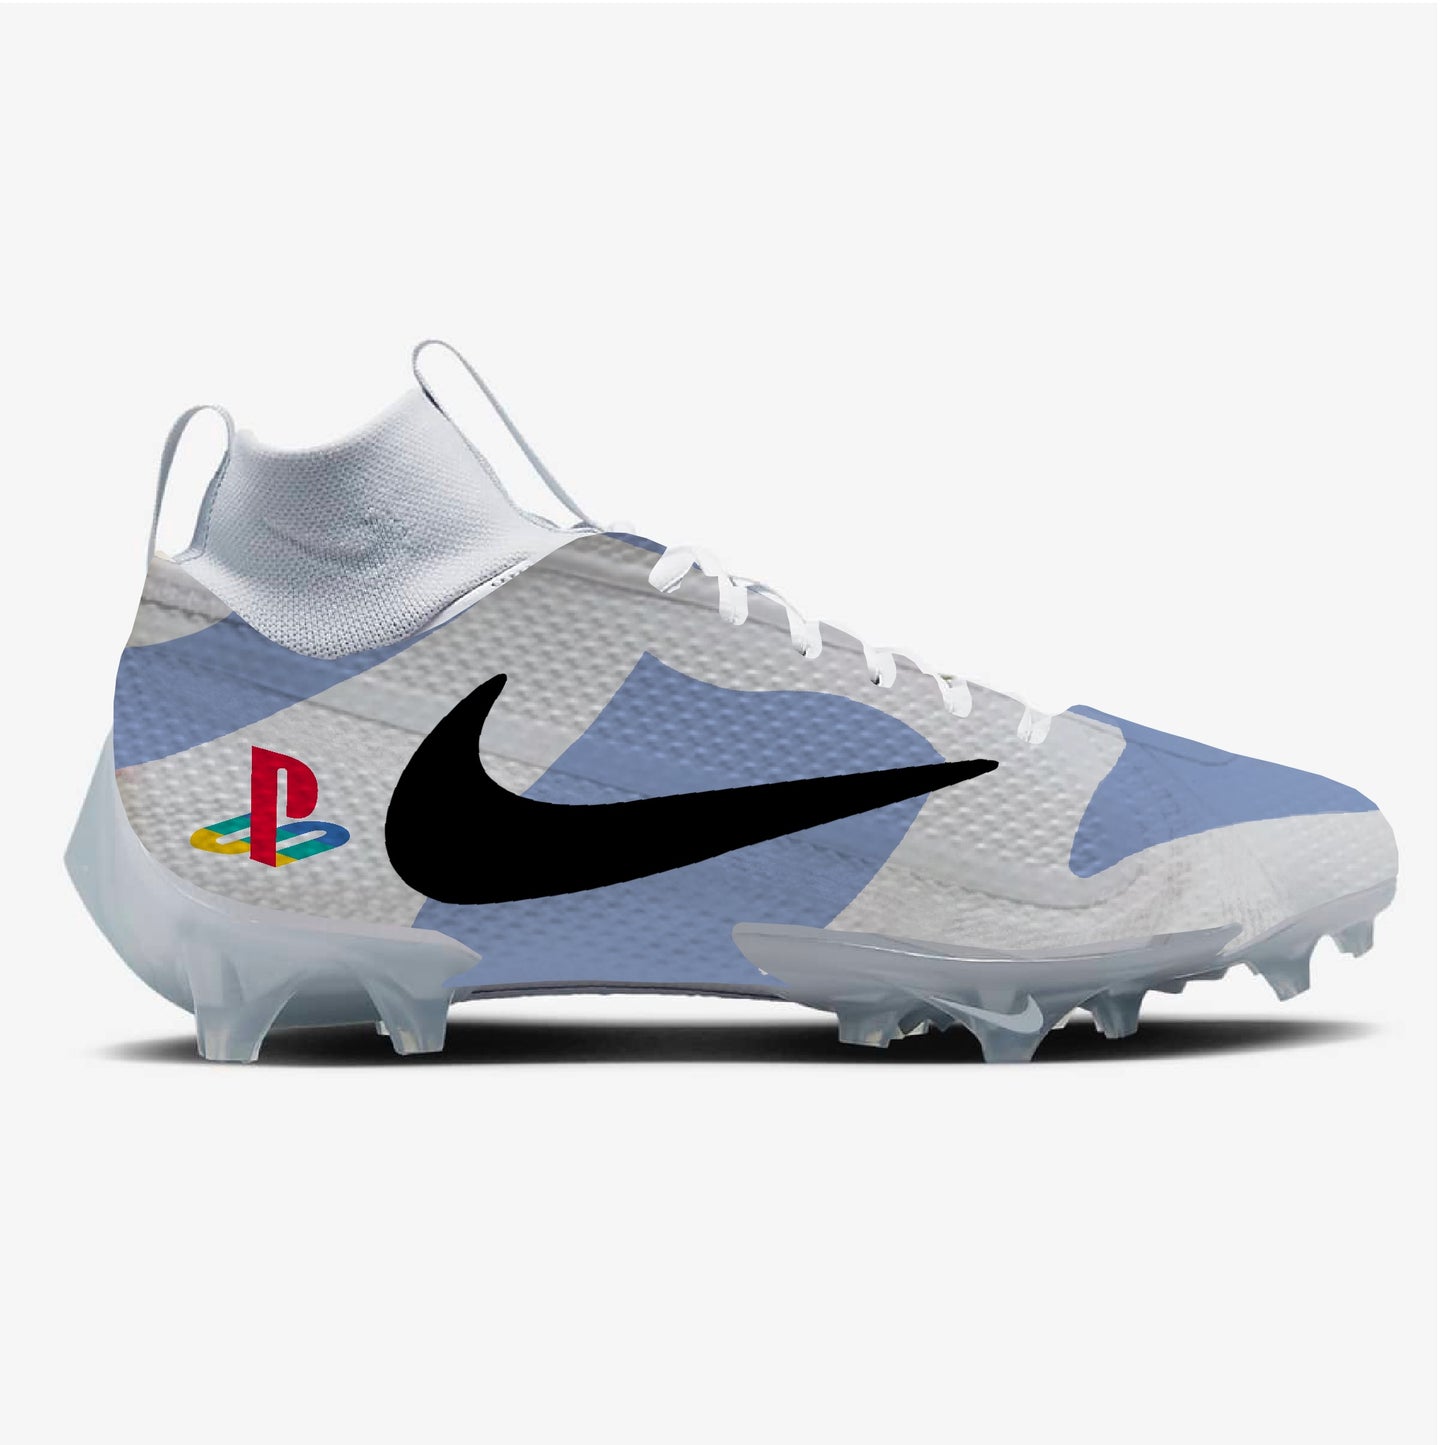 PlayStation Nike Dunk Football Cleats